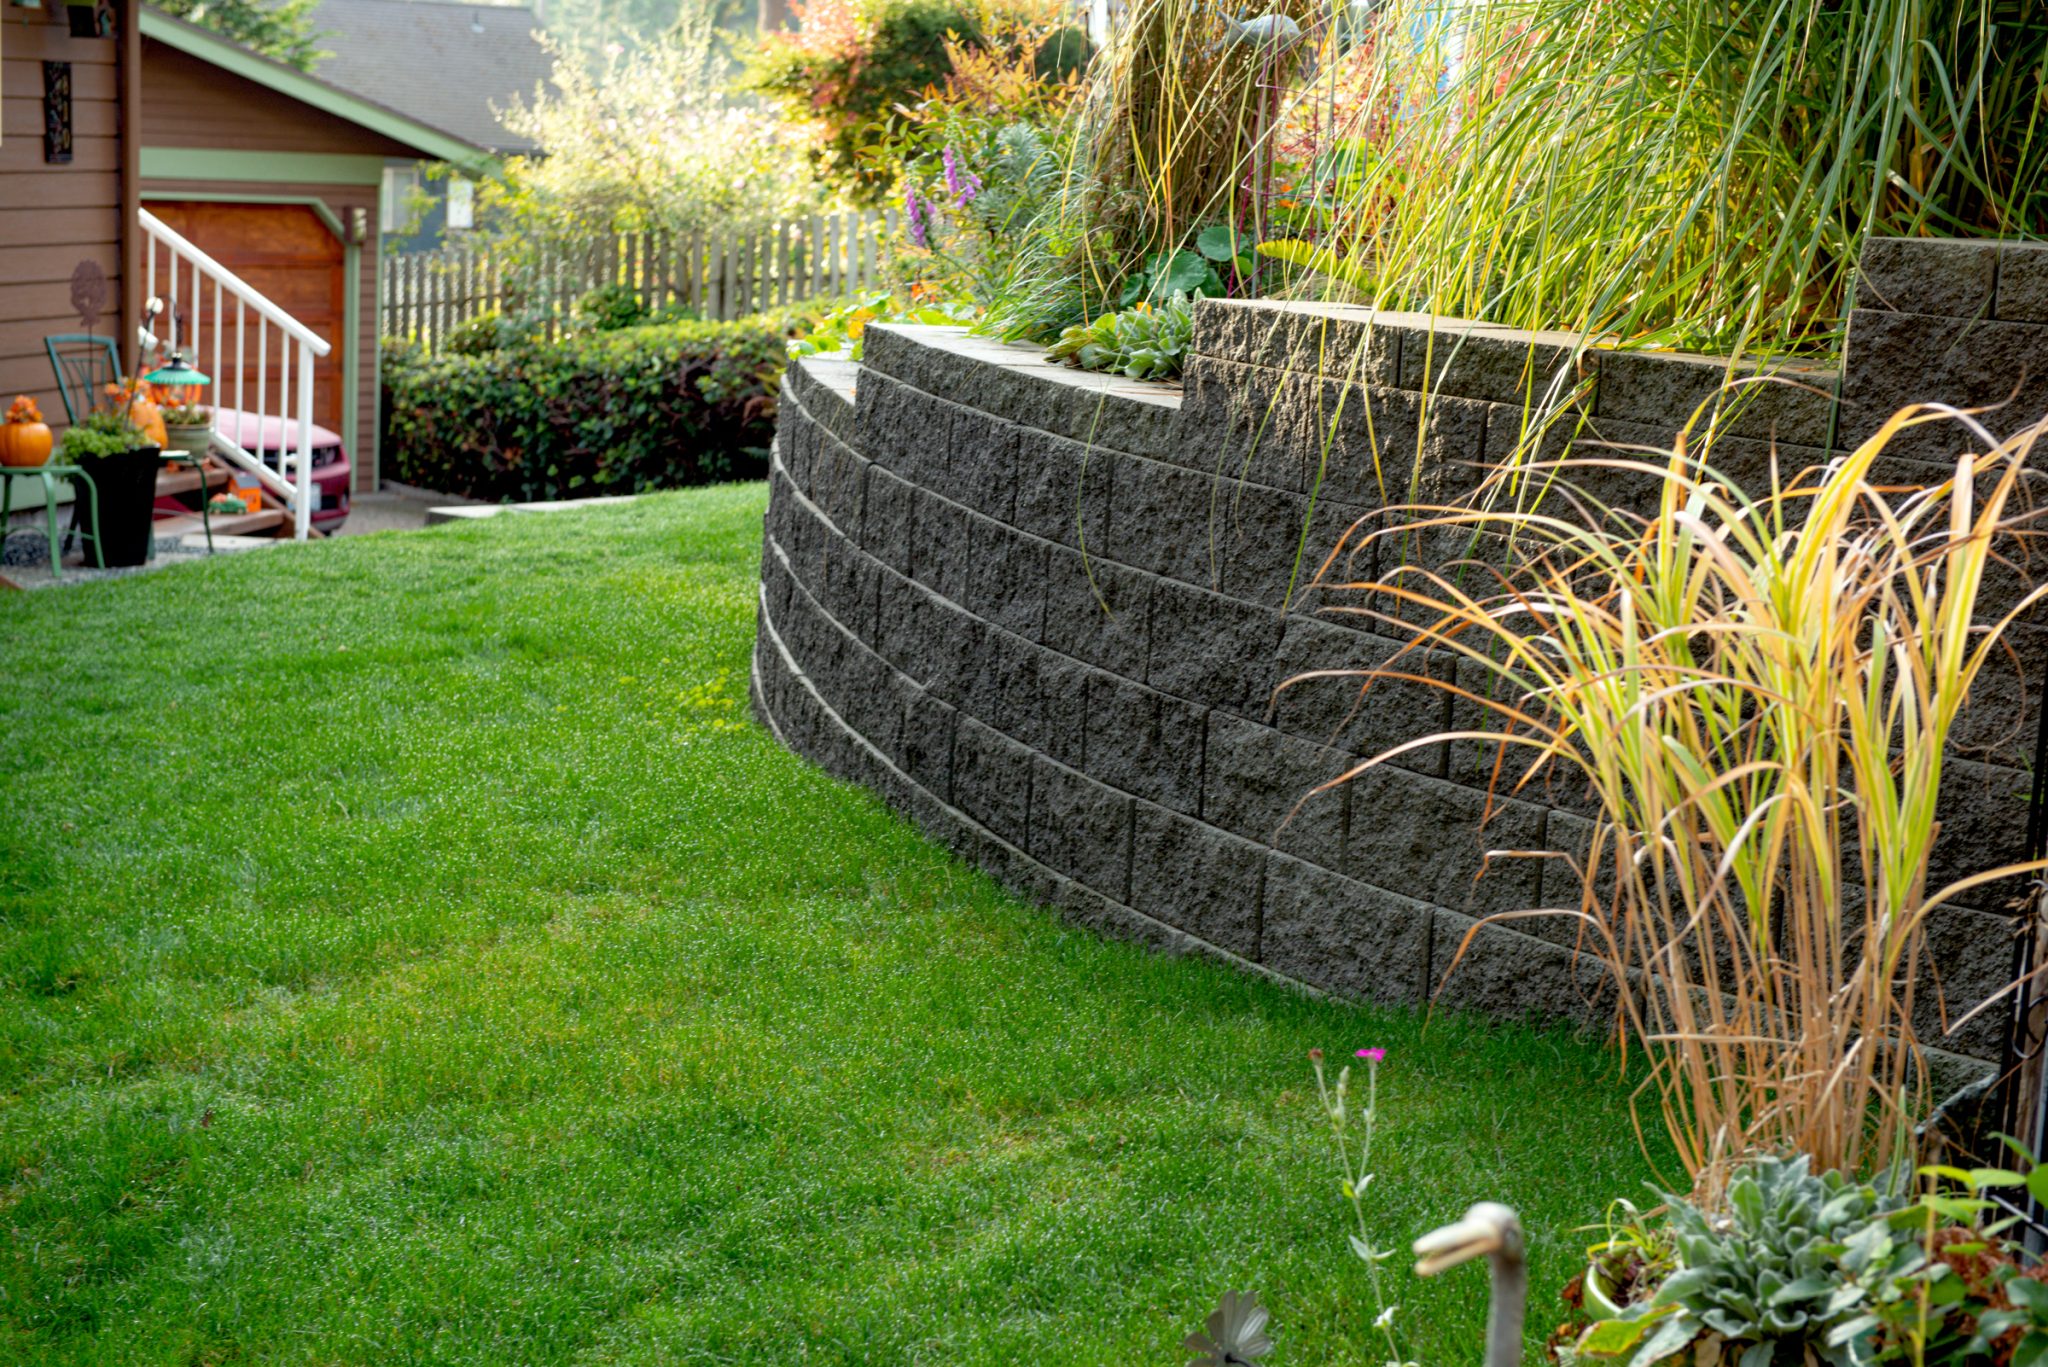 CornerStone 100 retaining wall blocks for steep sloped yards